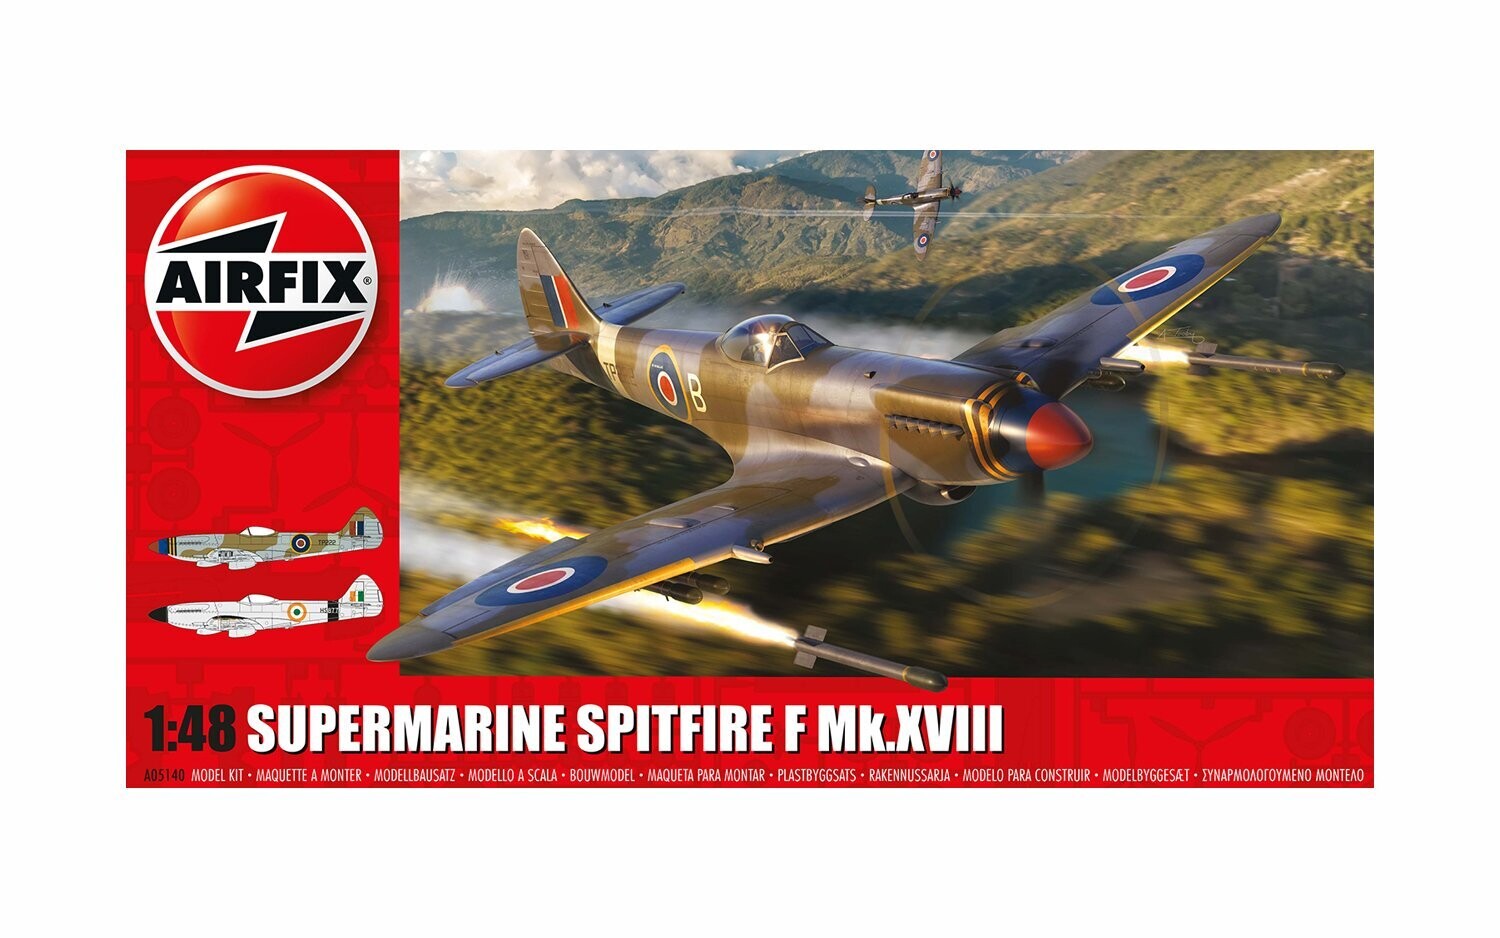 Airfix A05140 Supermarine Spitfire F Mk.XVIII 1:48 Scale Plastic Model Kit